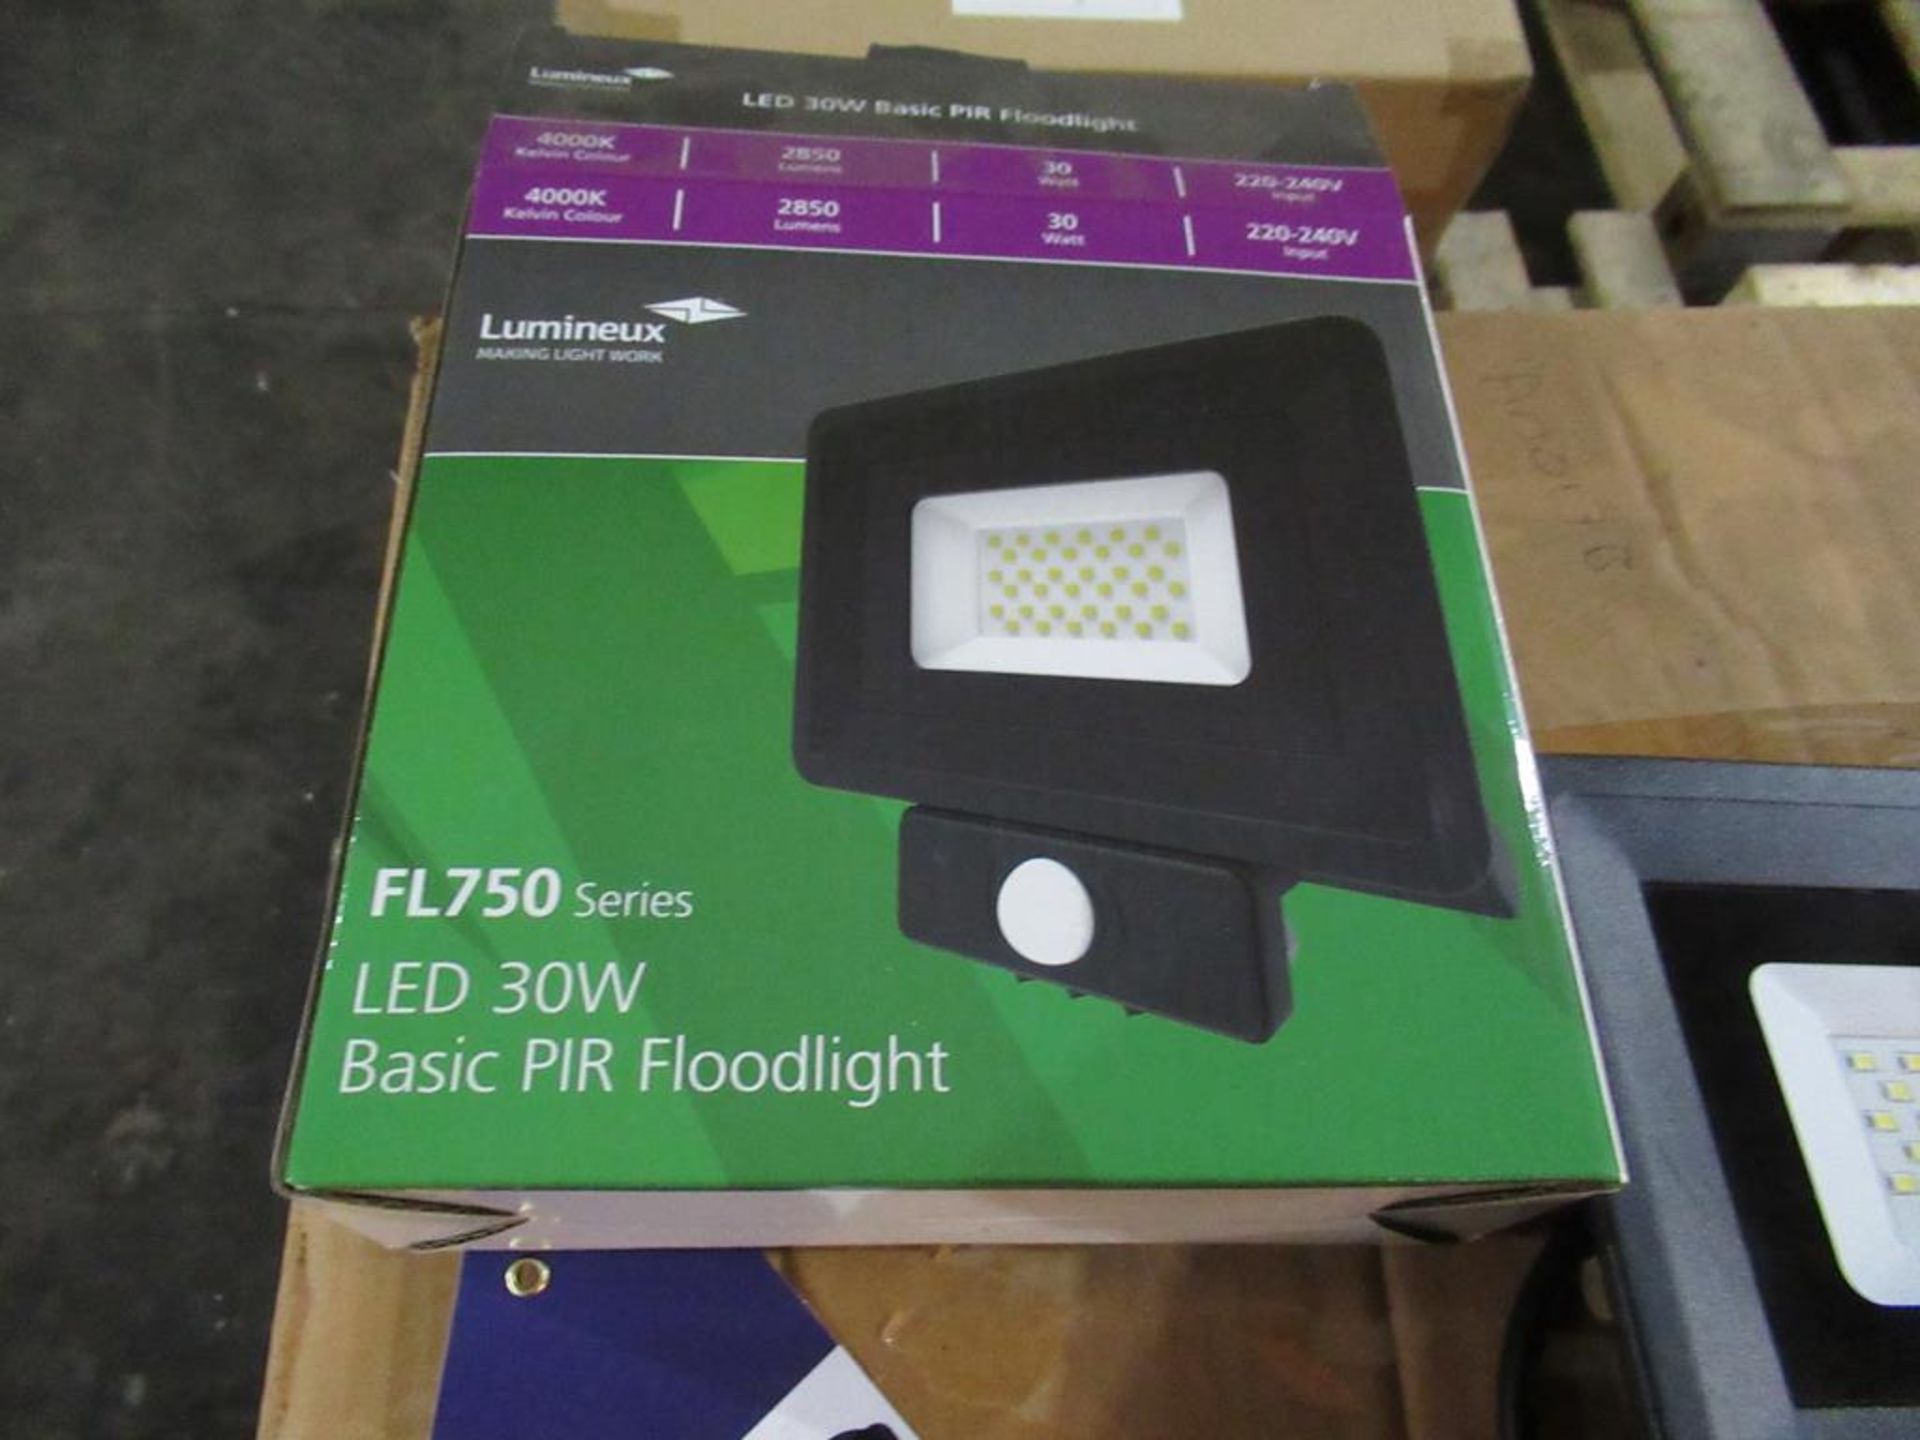 40 x LED 30W PIR Floodlight 4000K 220-240V Input OEM Trade Price £1112 - Image 4 of 4